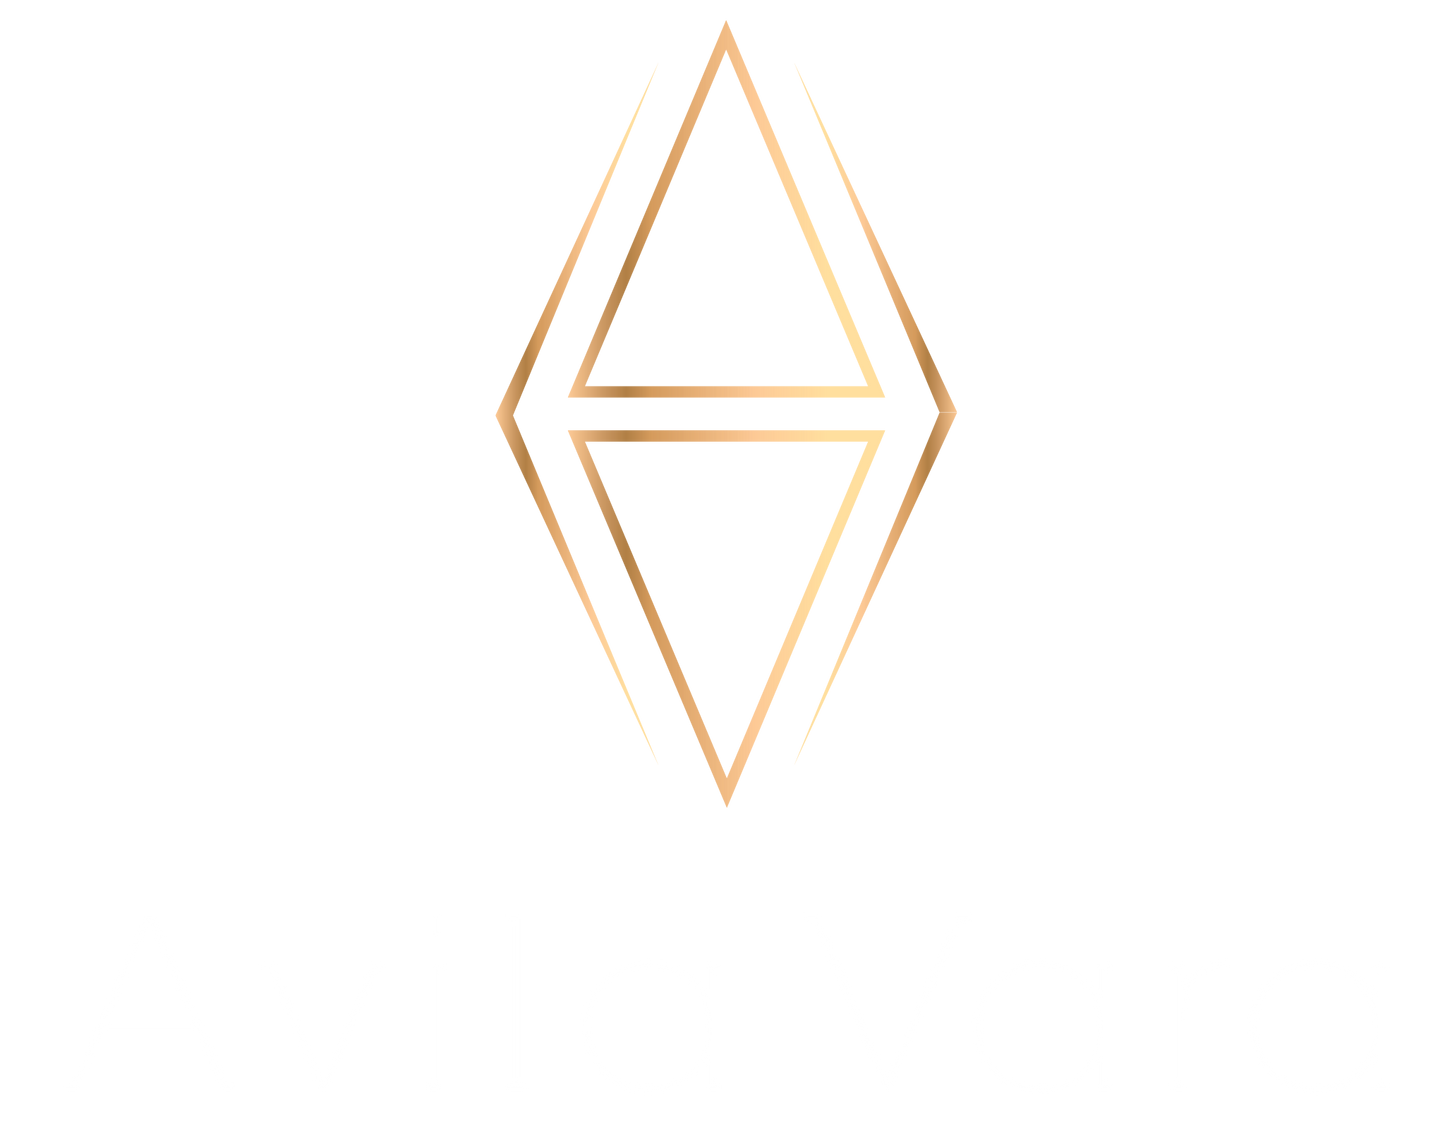 Avila Vara - Diamond Icon | Ethical, designer fine jewellery featuring luxury diamonds